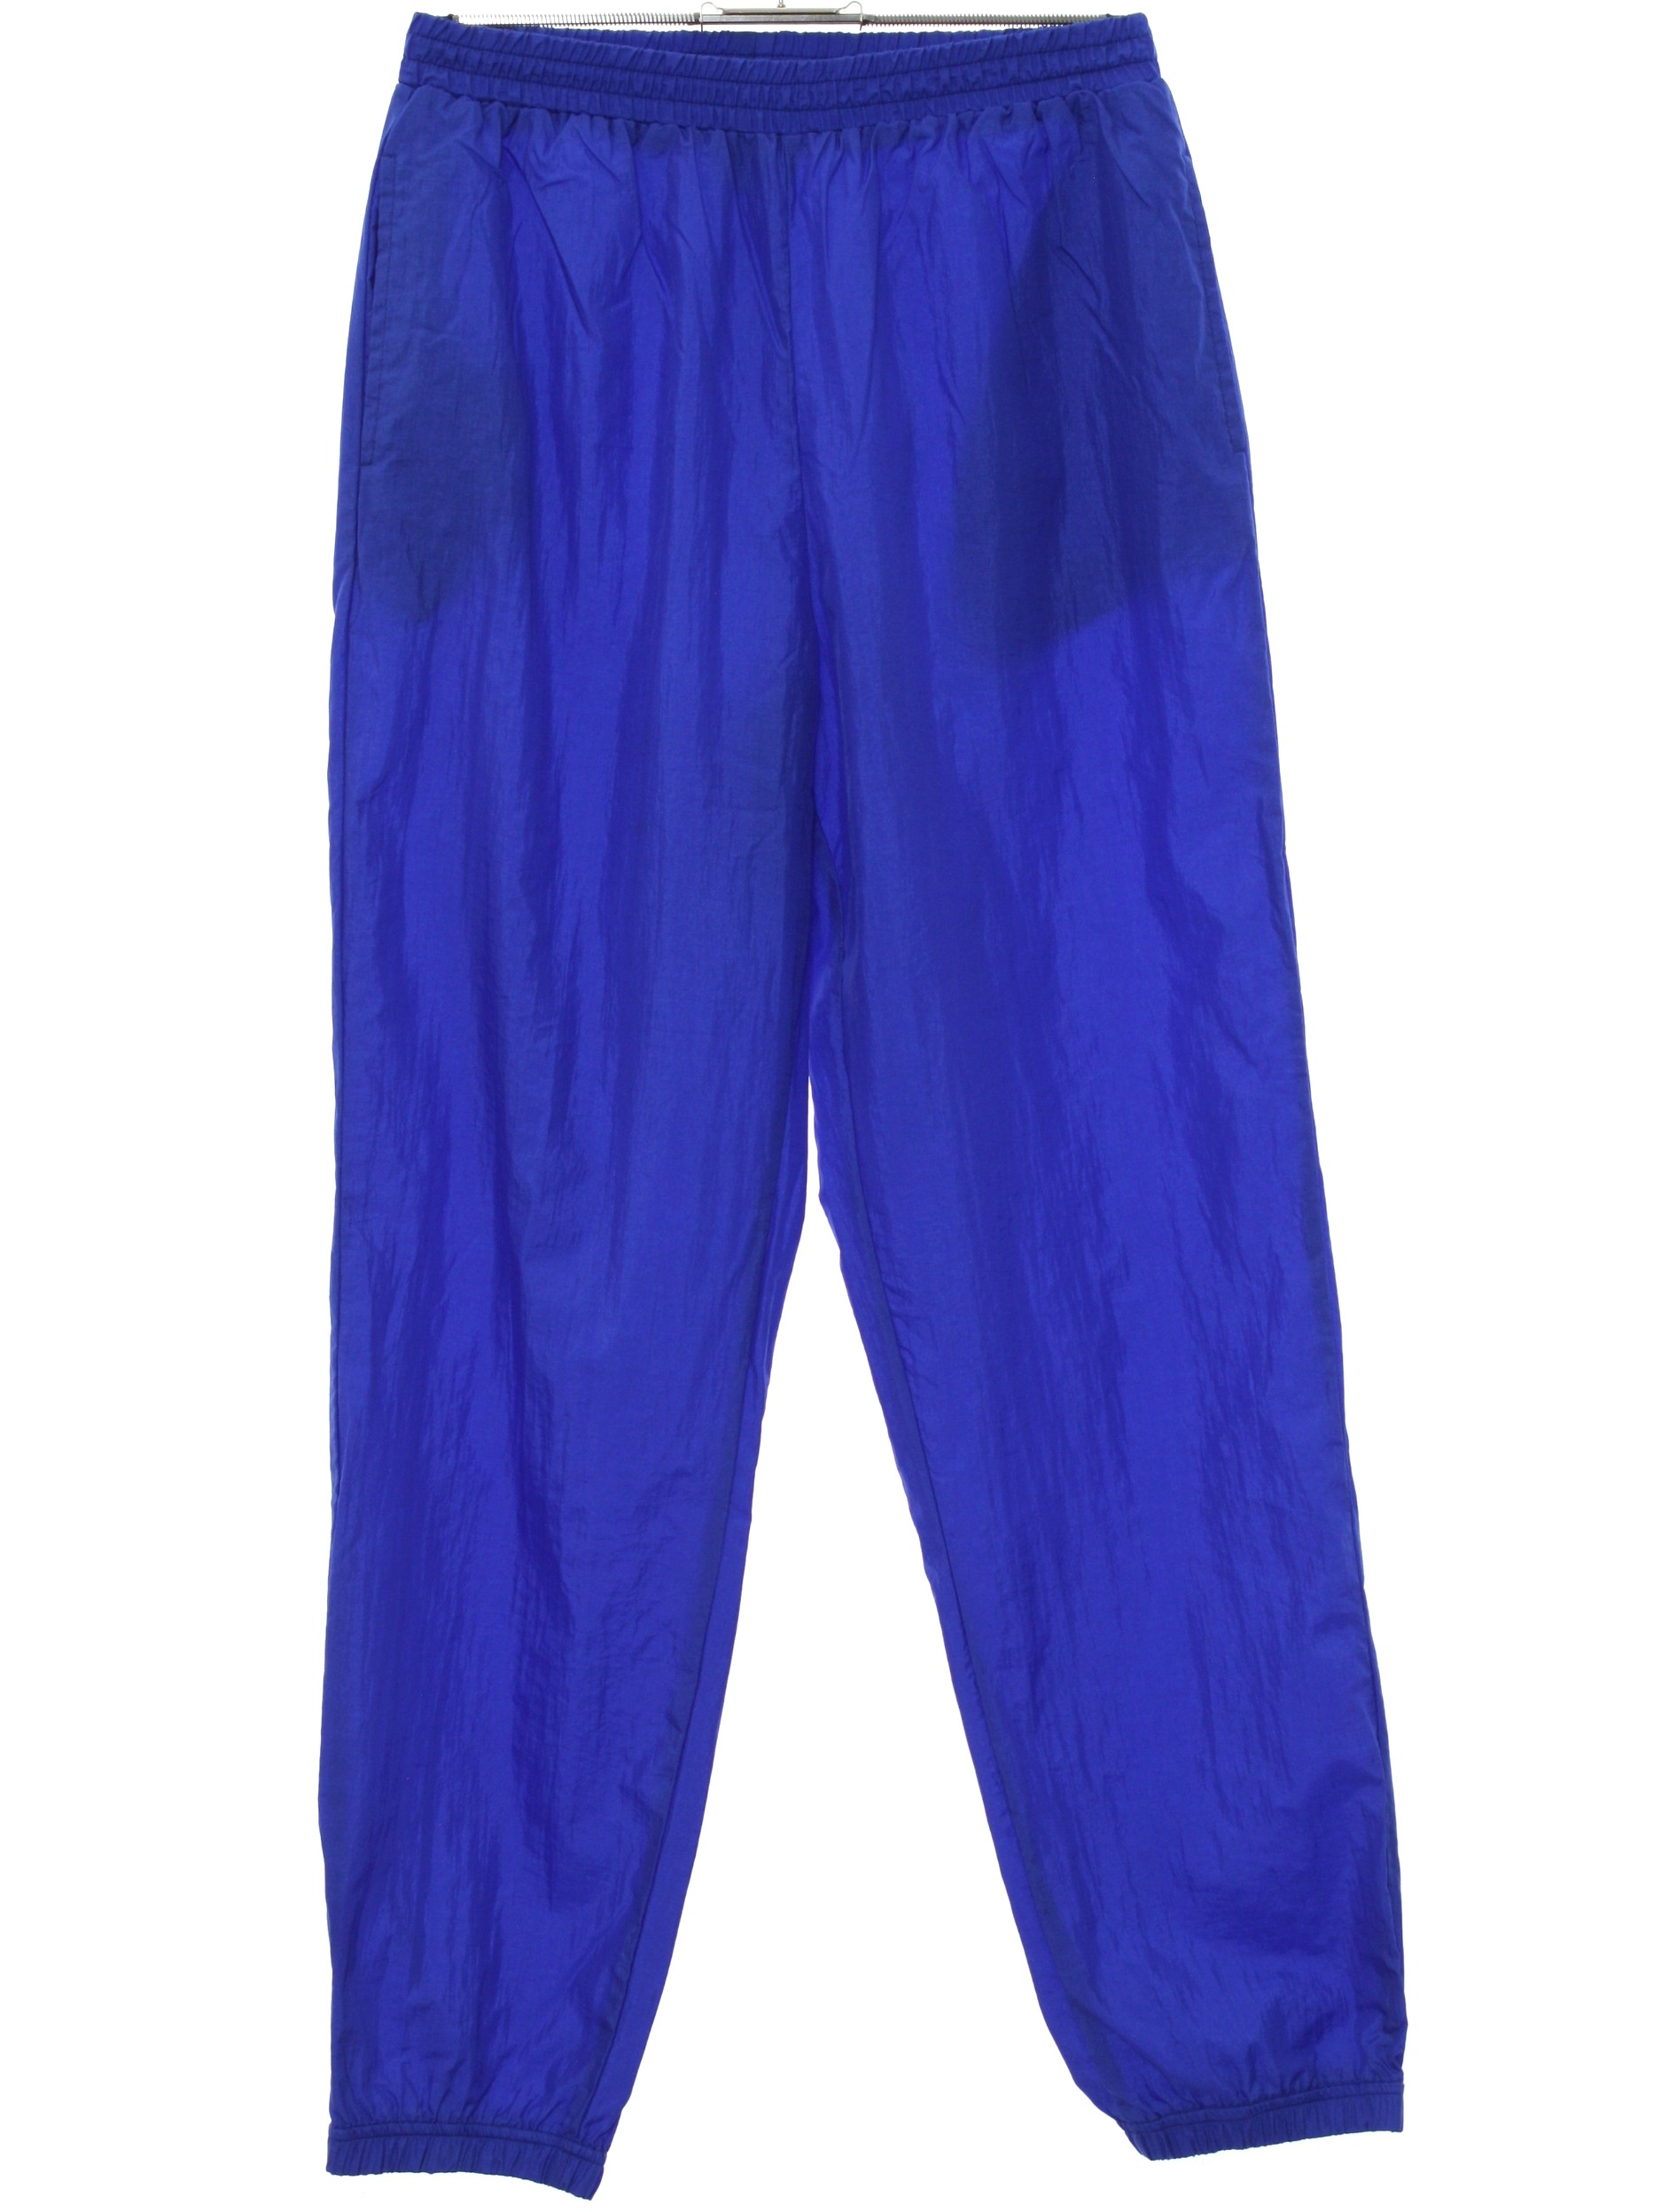 blue baggy pants